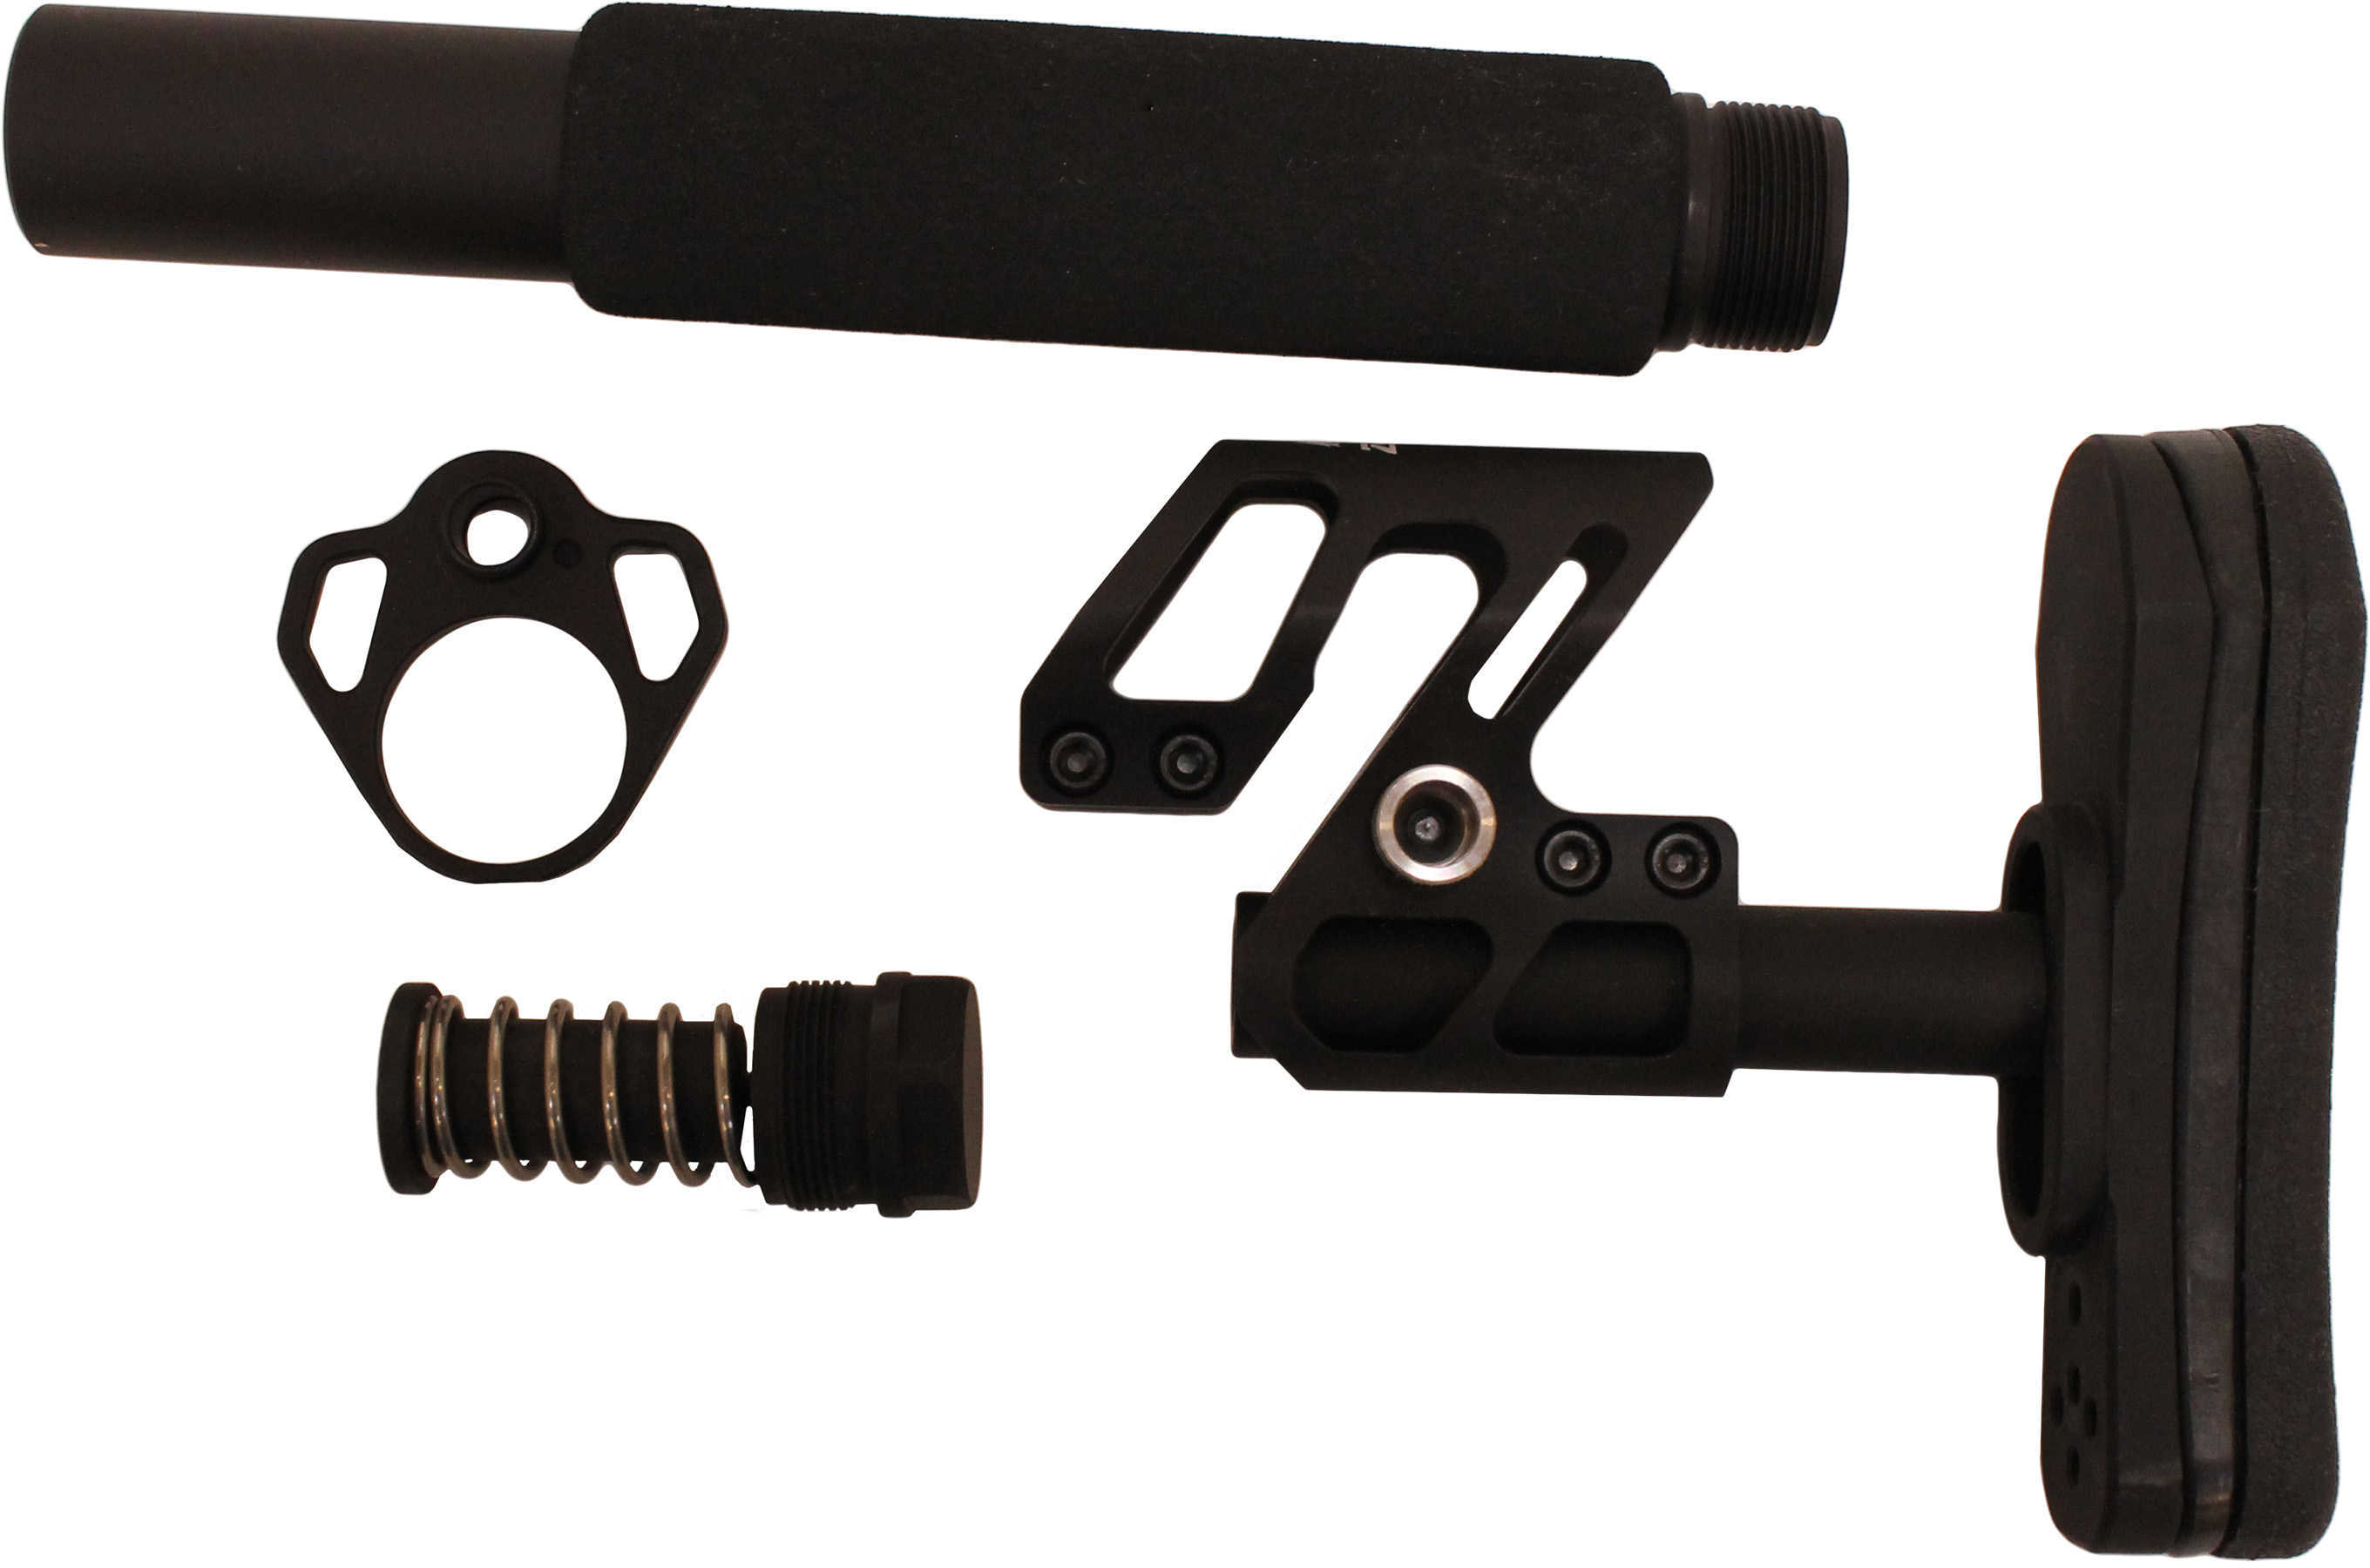 Zulu Adjustable Stock with Pad Pistol Buffer Tube, Black Md: OS-ZULU-KIT-BLK